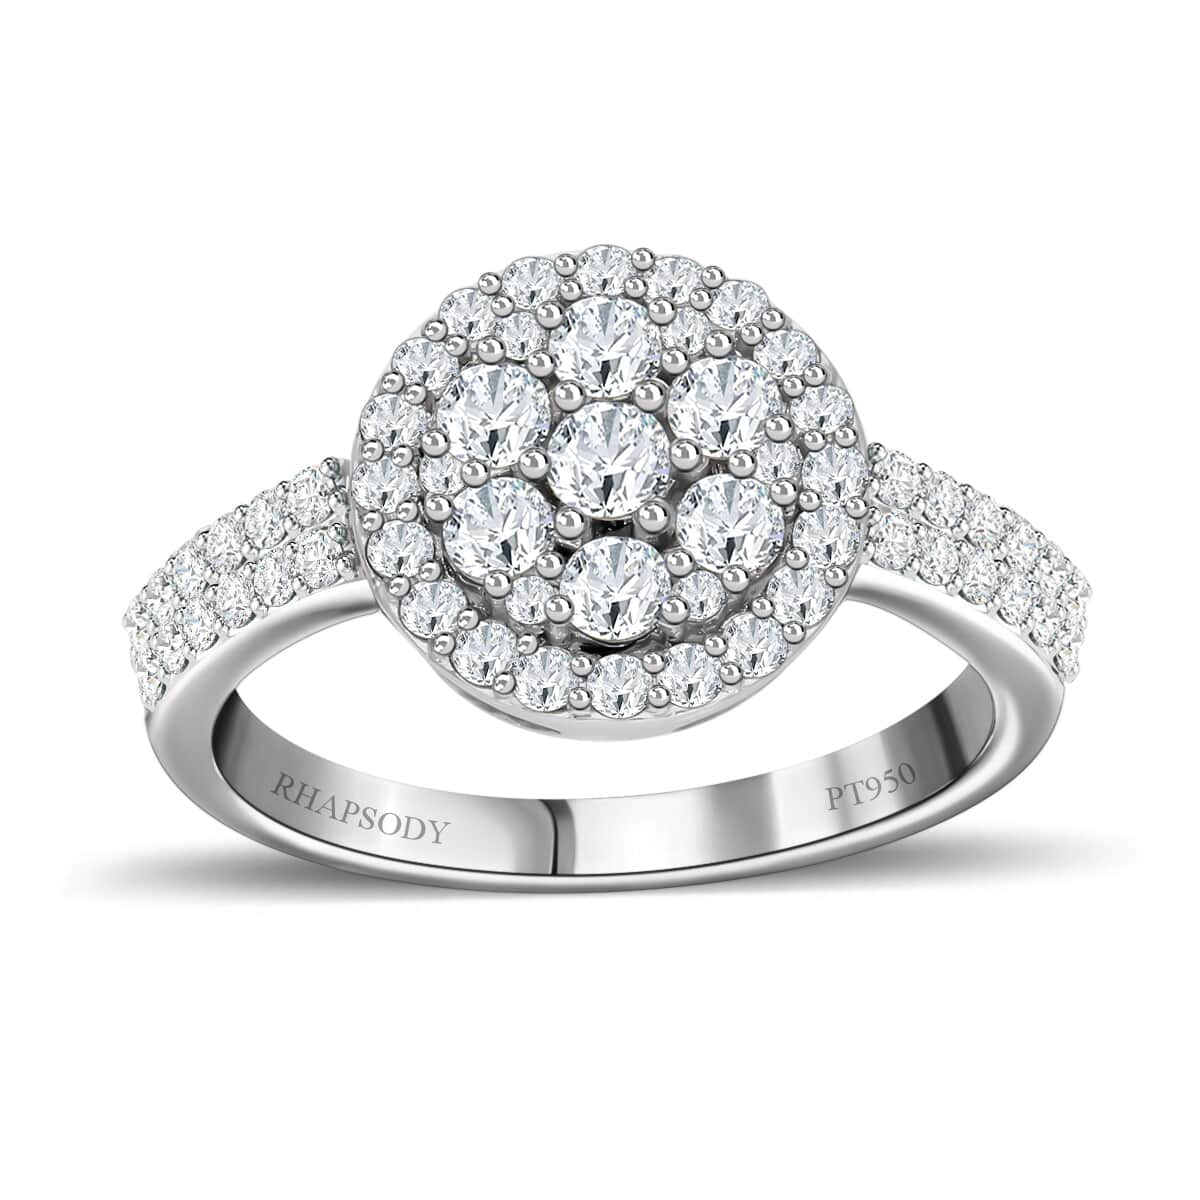 Rhapsody 950 Platinum IGI Certified Diamond Ring (Size 7.0) 5.75 Grams 1.00 ctw image number 0